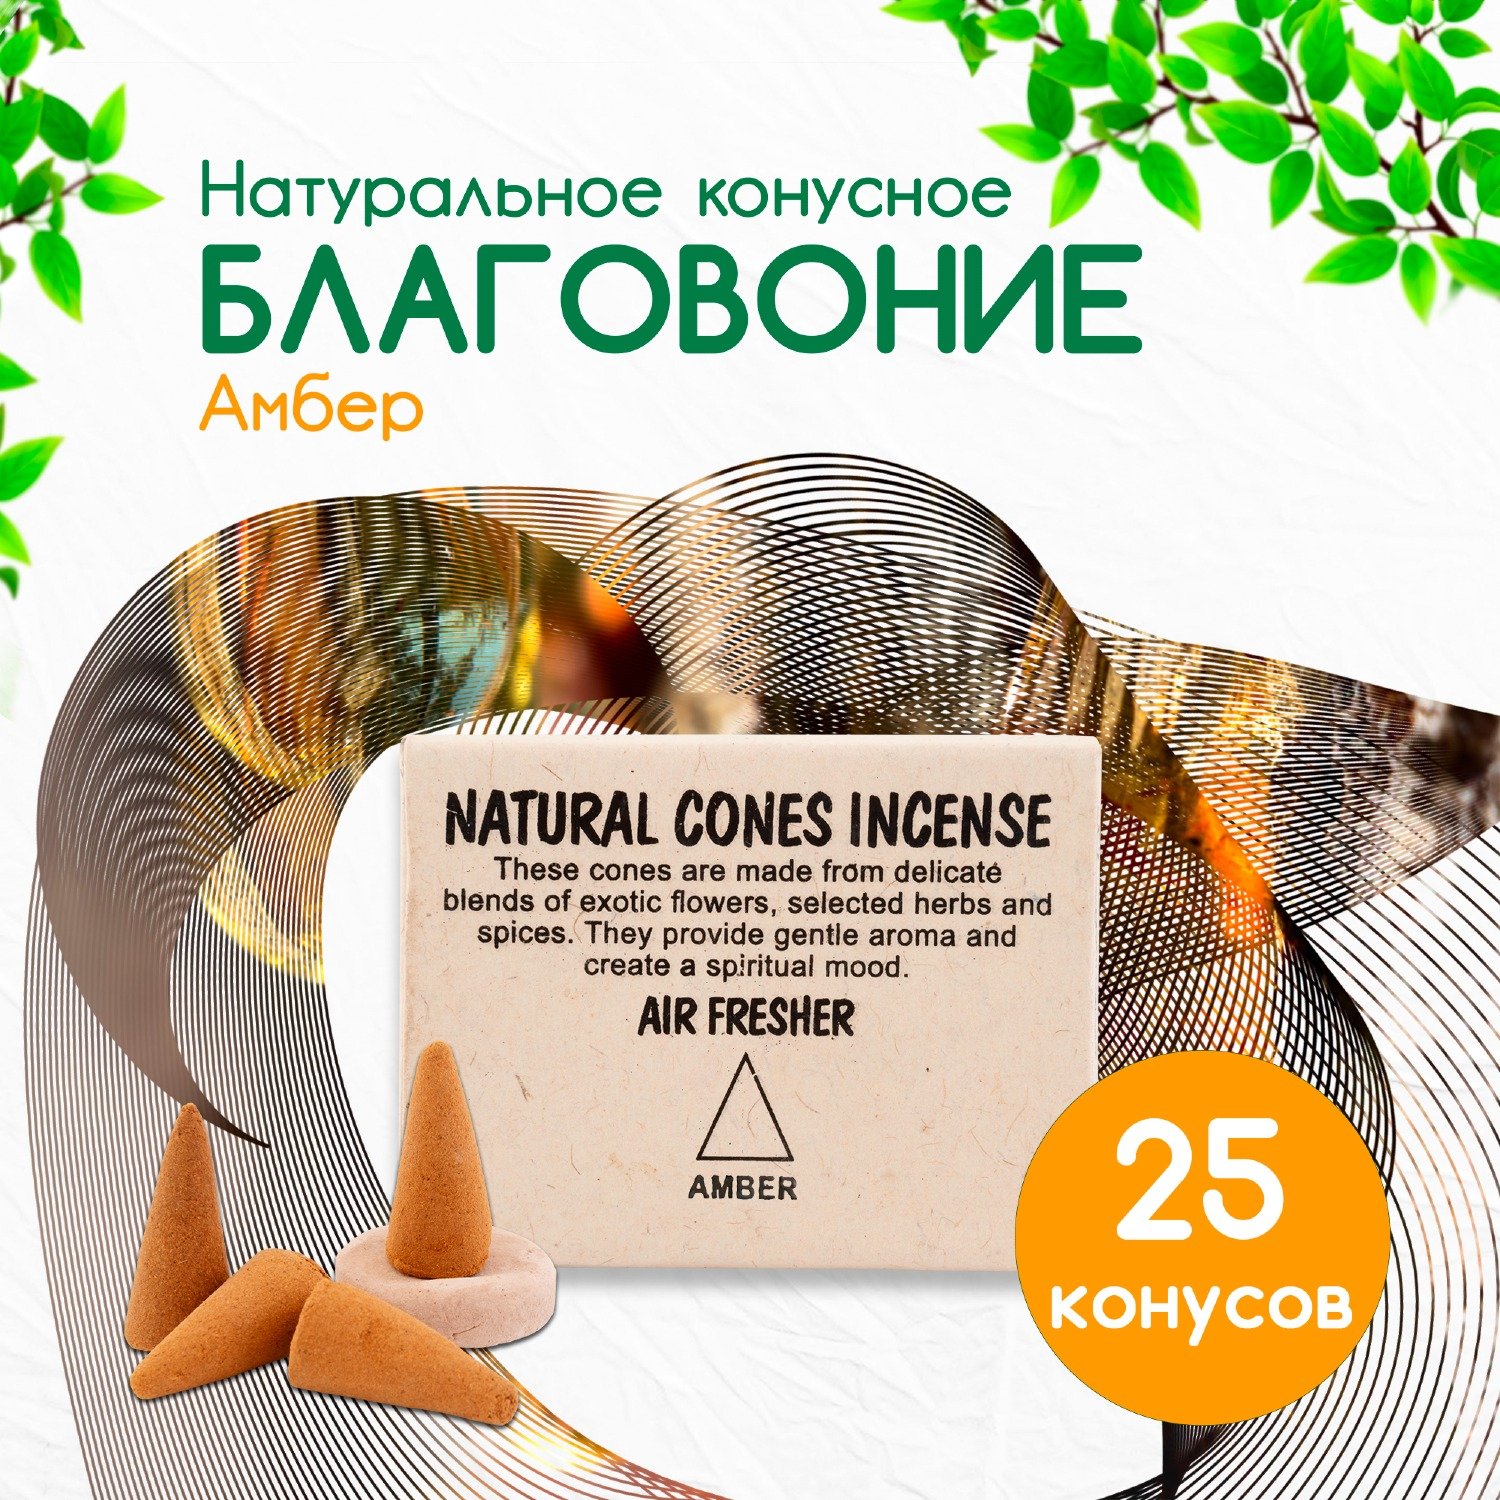 Natural Cones Incense "Amber" (Натуральное конусное благовоние "Амбер"), 25 конусов по 3 см. 